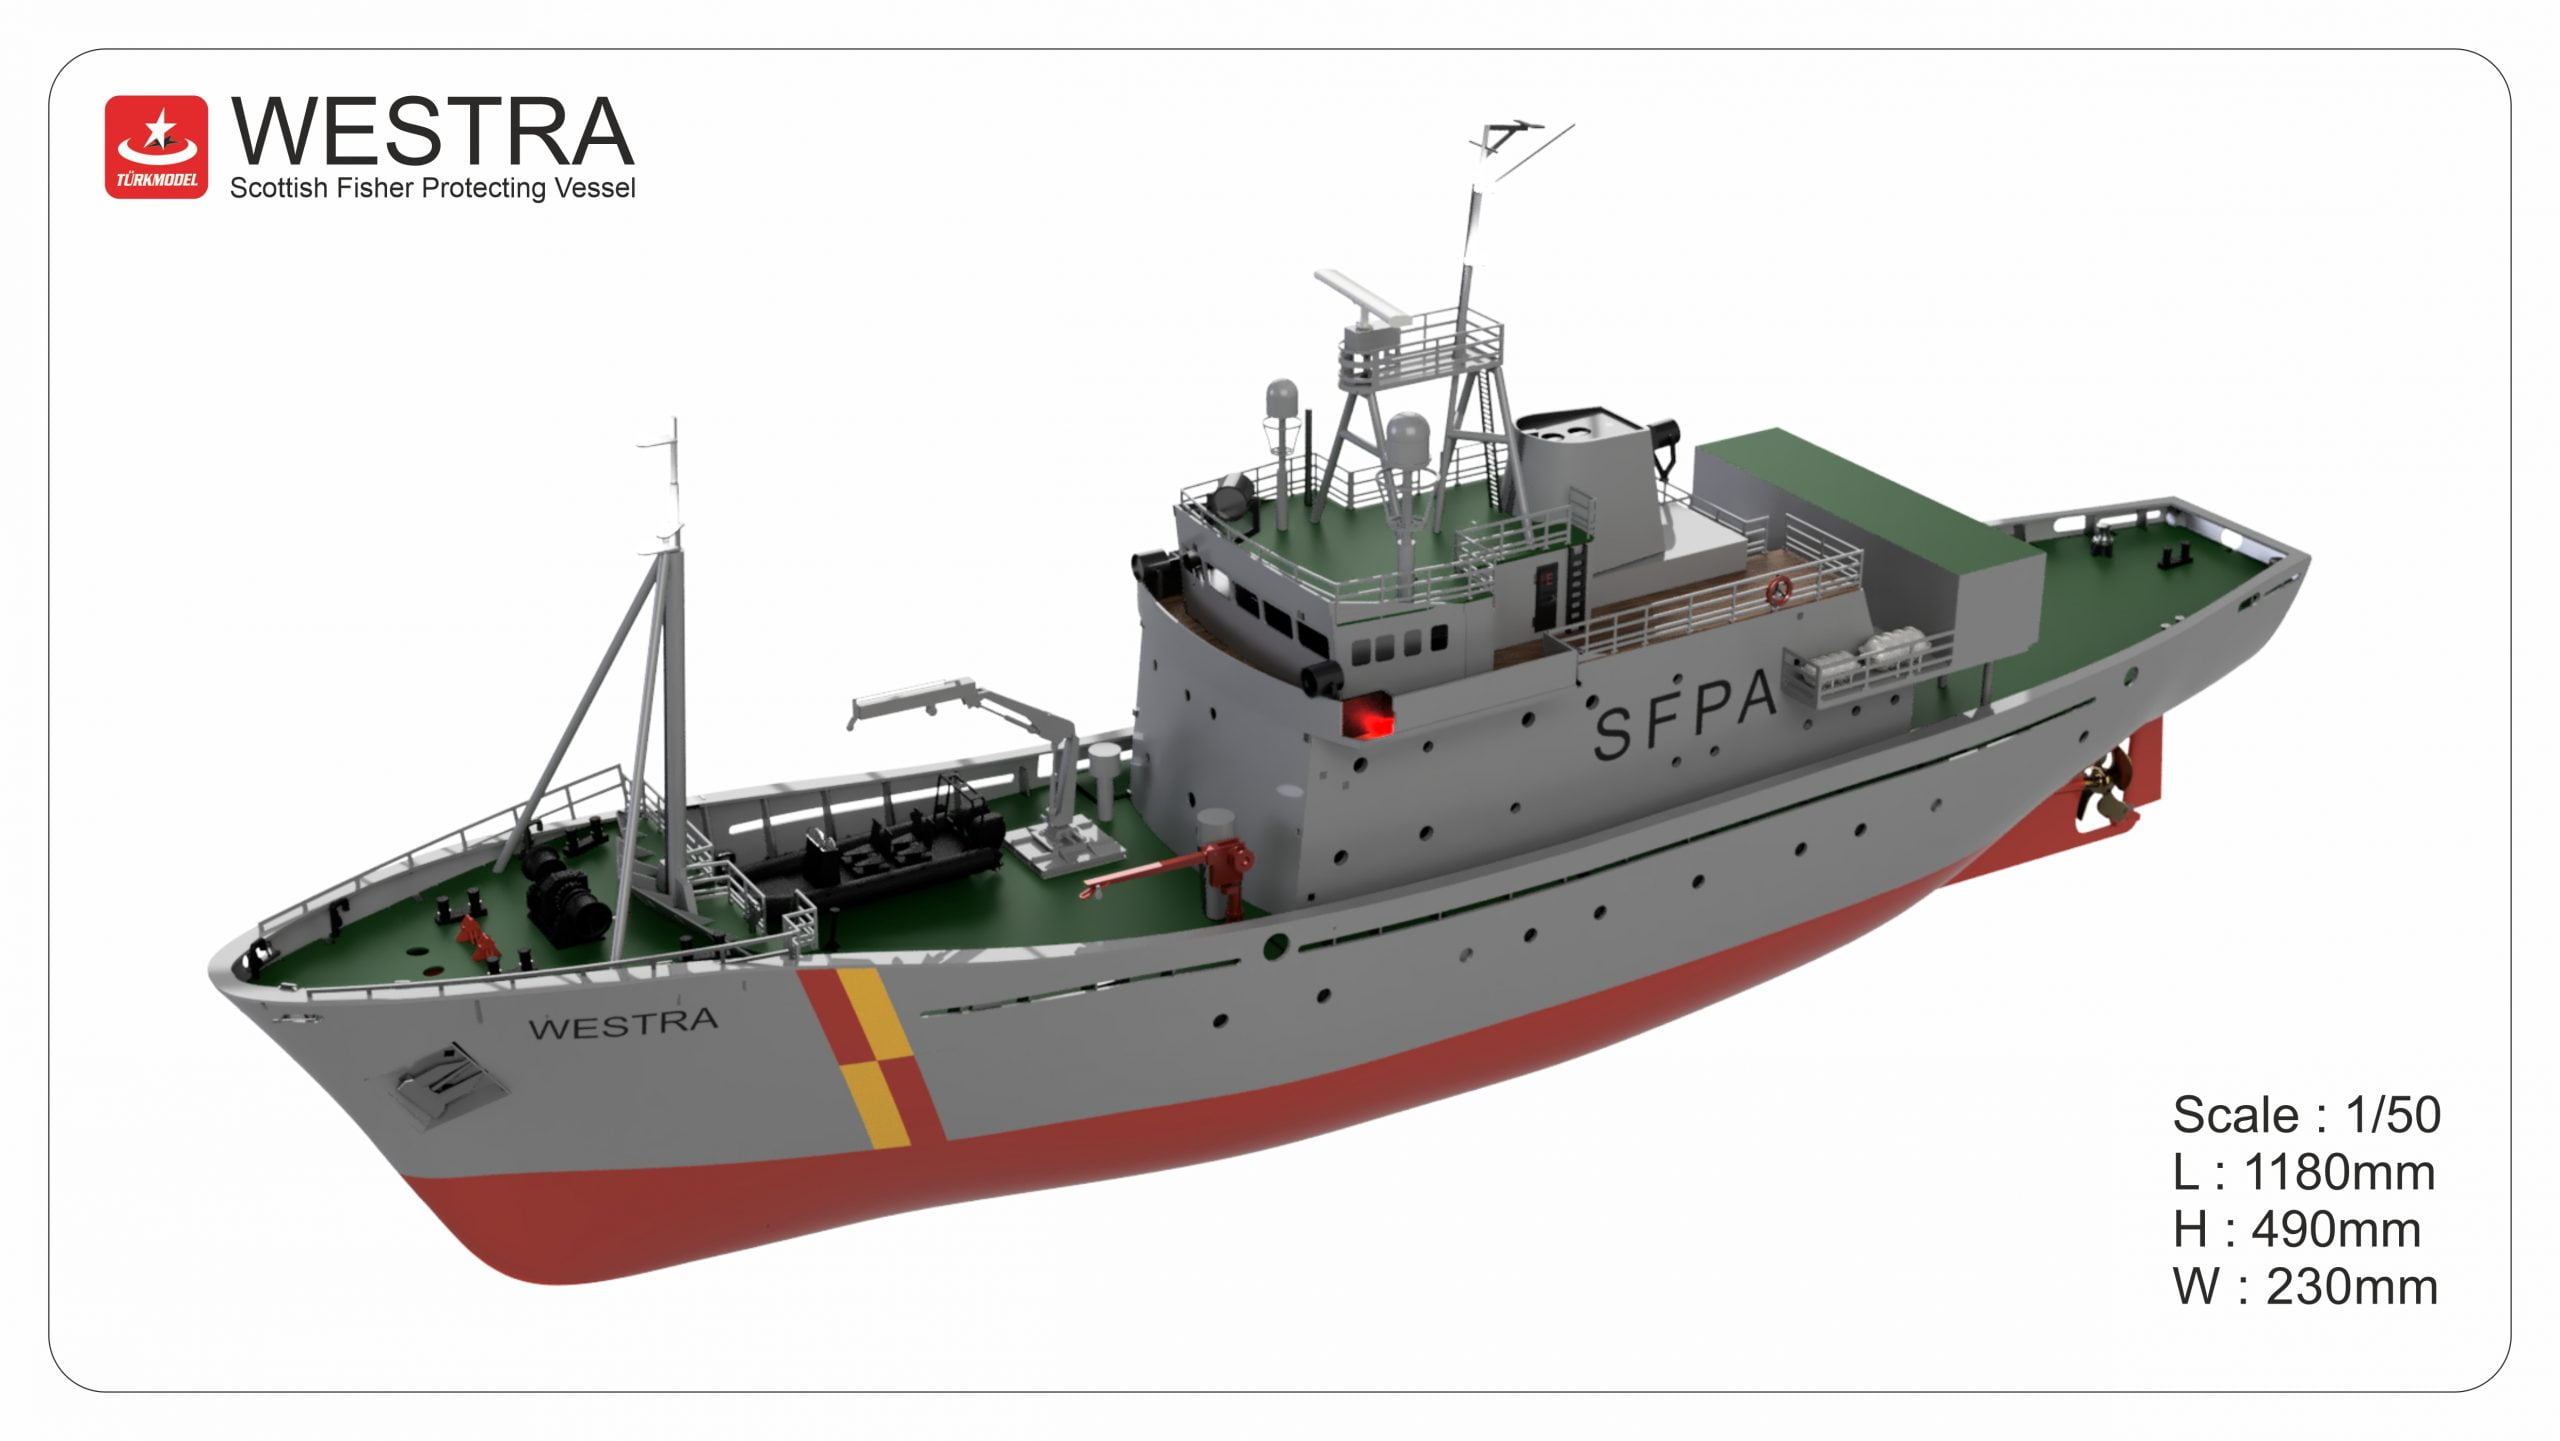 Türkmodel FBV WESTRA “Scottish Fisher Protection Vessel” R/C 1/50